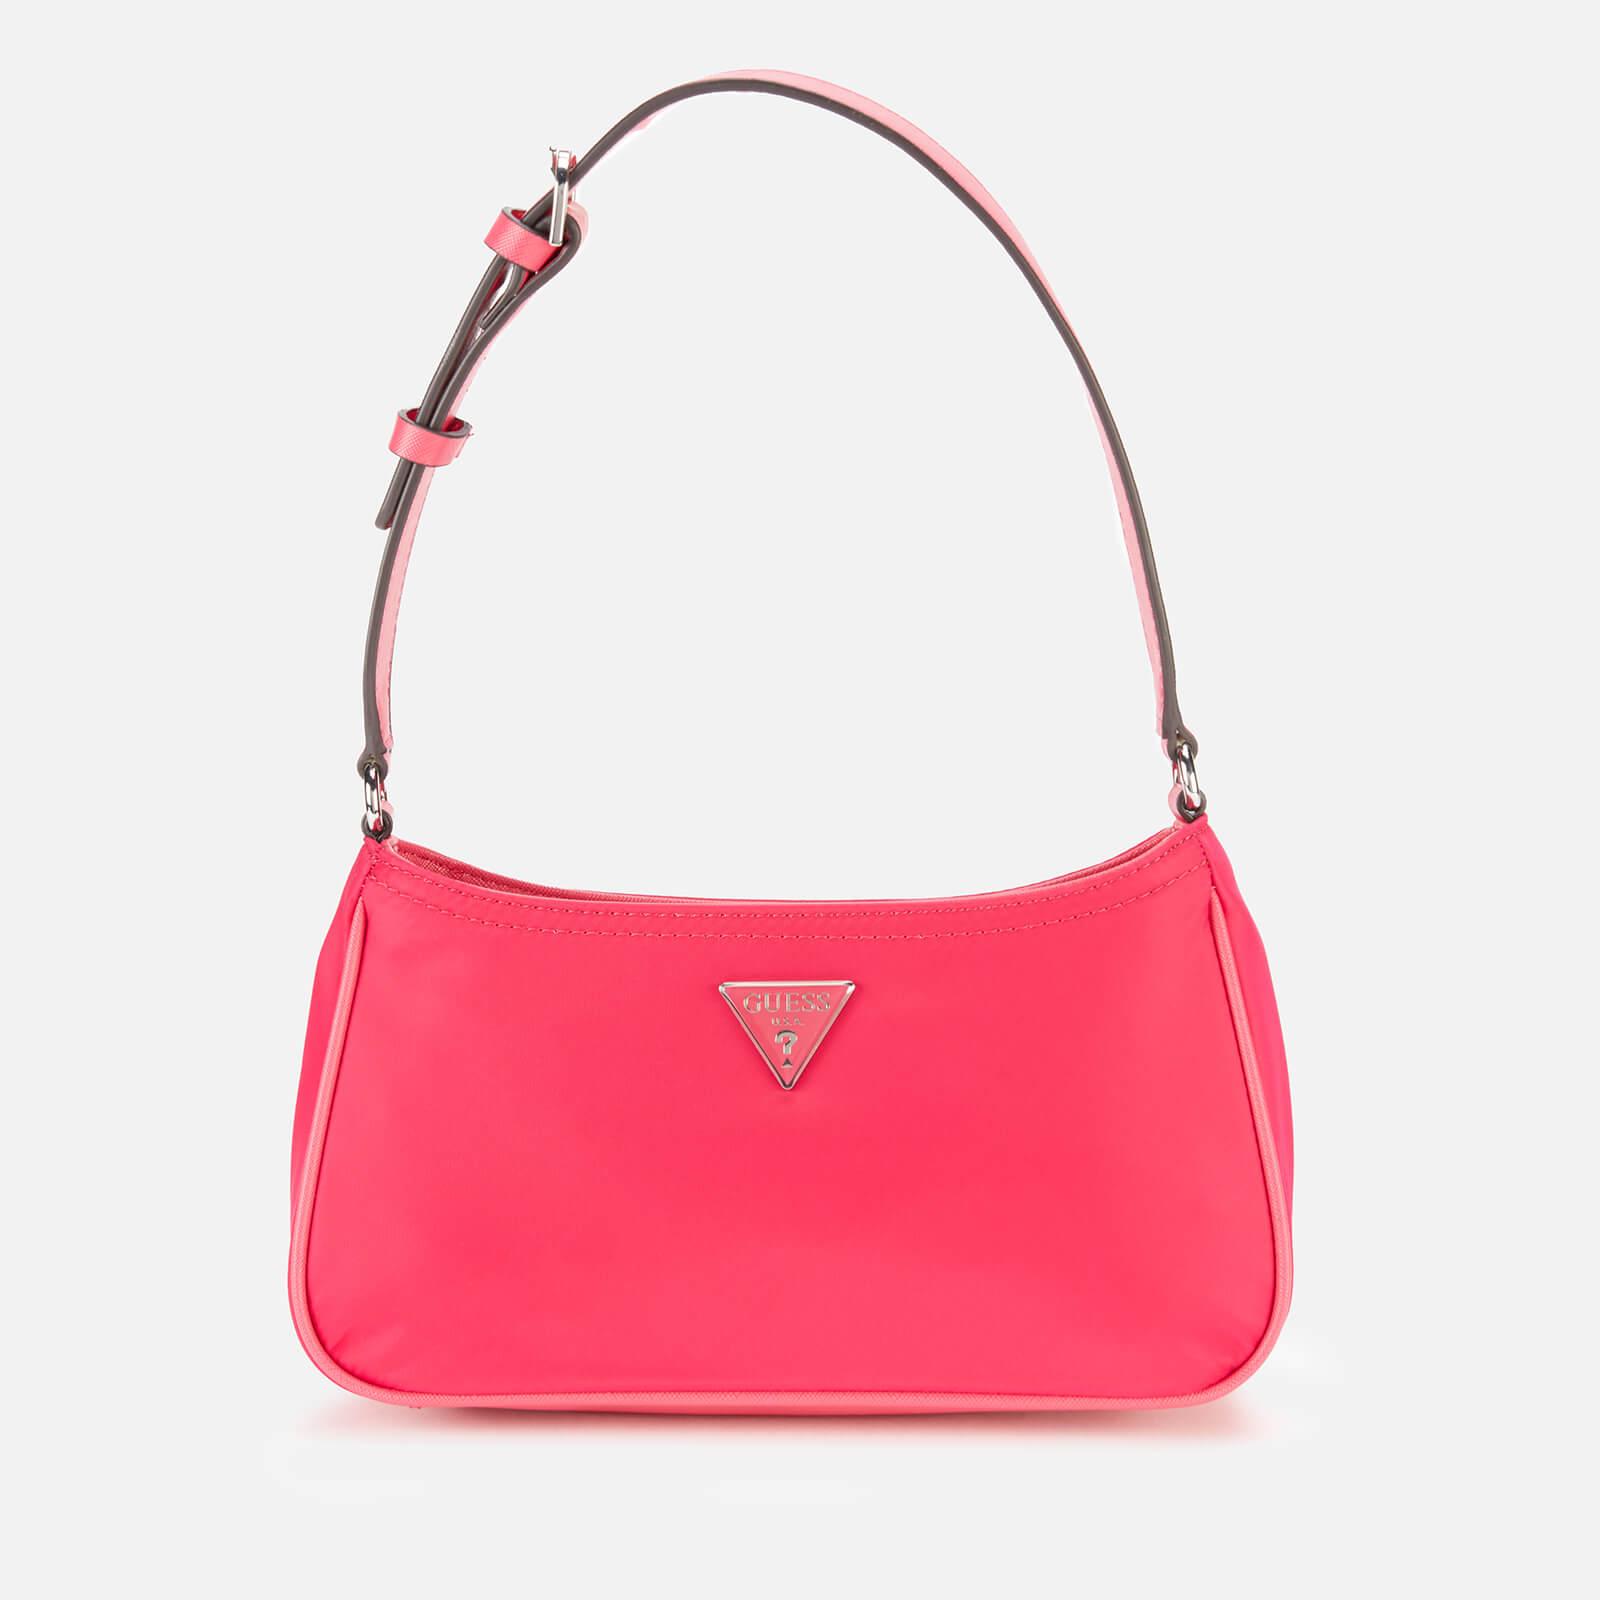 GUESS Signature Embossed Swoon Satchel Crossbody Bag Handbag Purse  Turquoise | Accessorising - Brand Name / Designer Handbags For Carry &  Wear... Share If You C… | Bags, Guess bags handbags, Crossbody bag